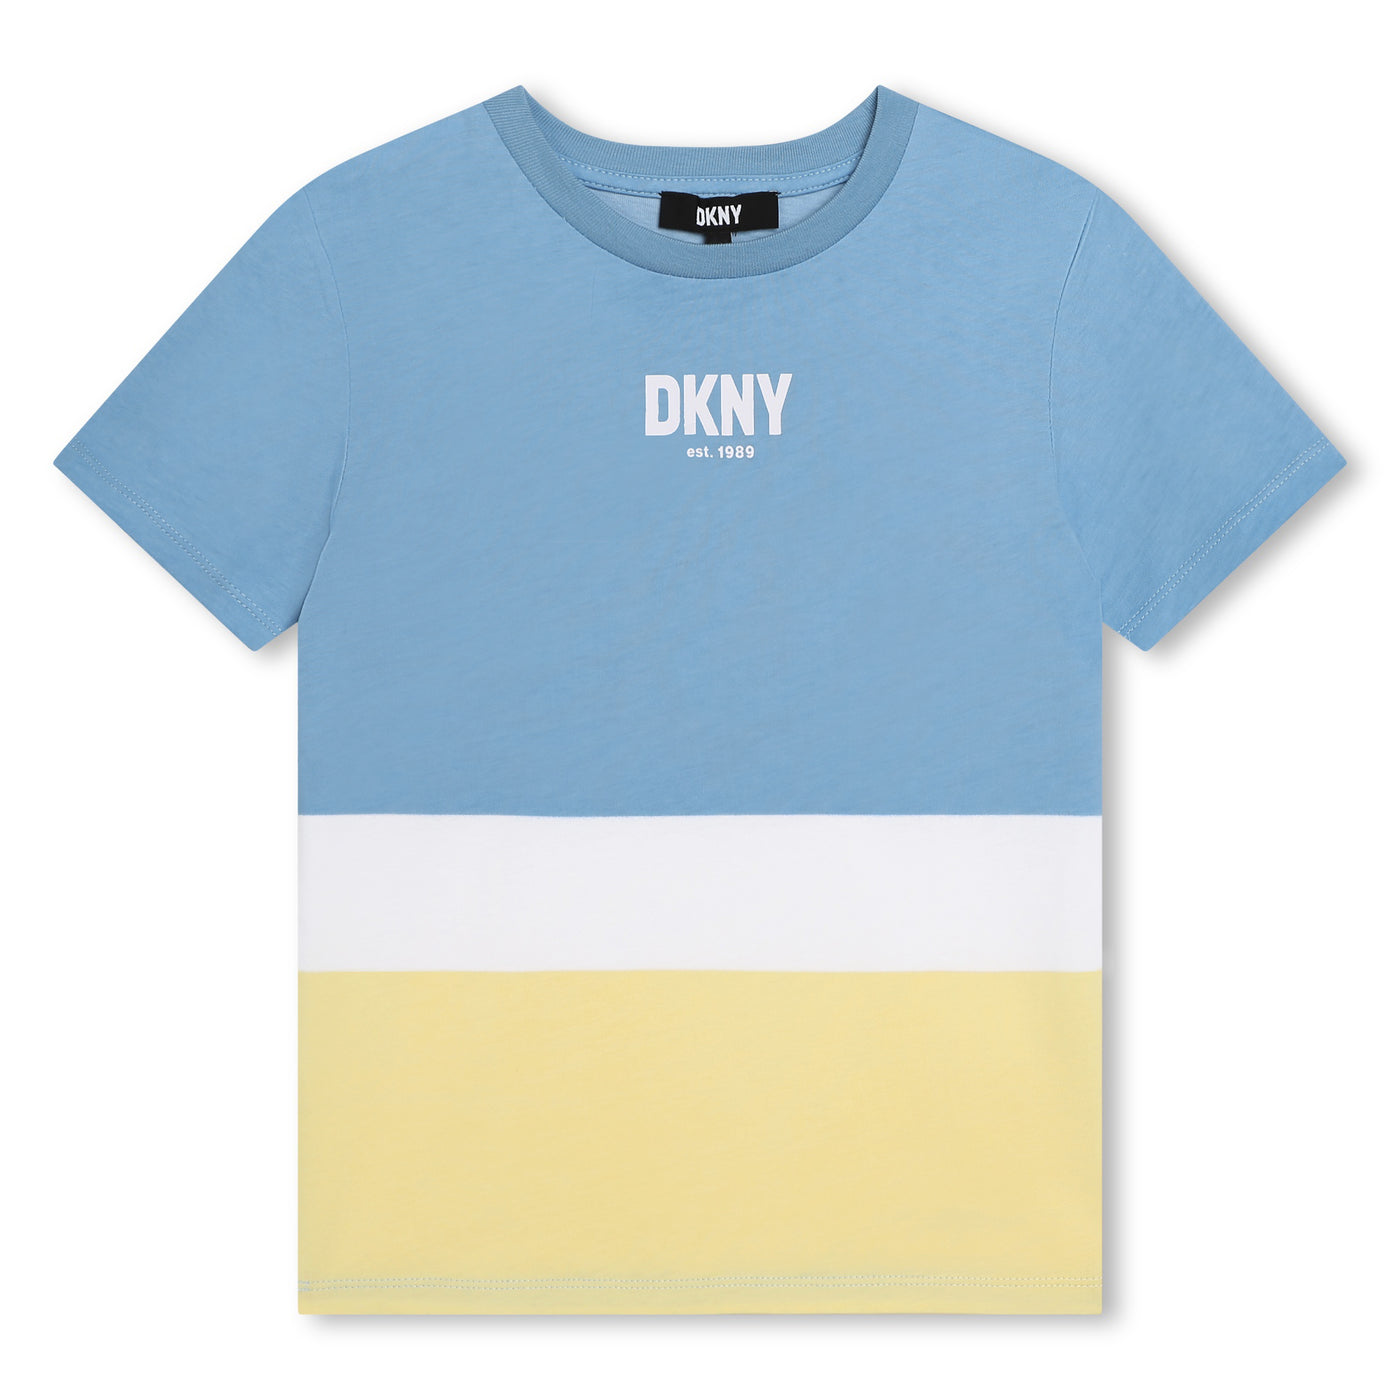 Pale Blue T-shirt by DKNY